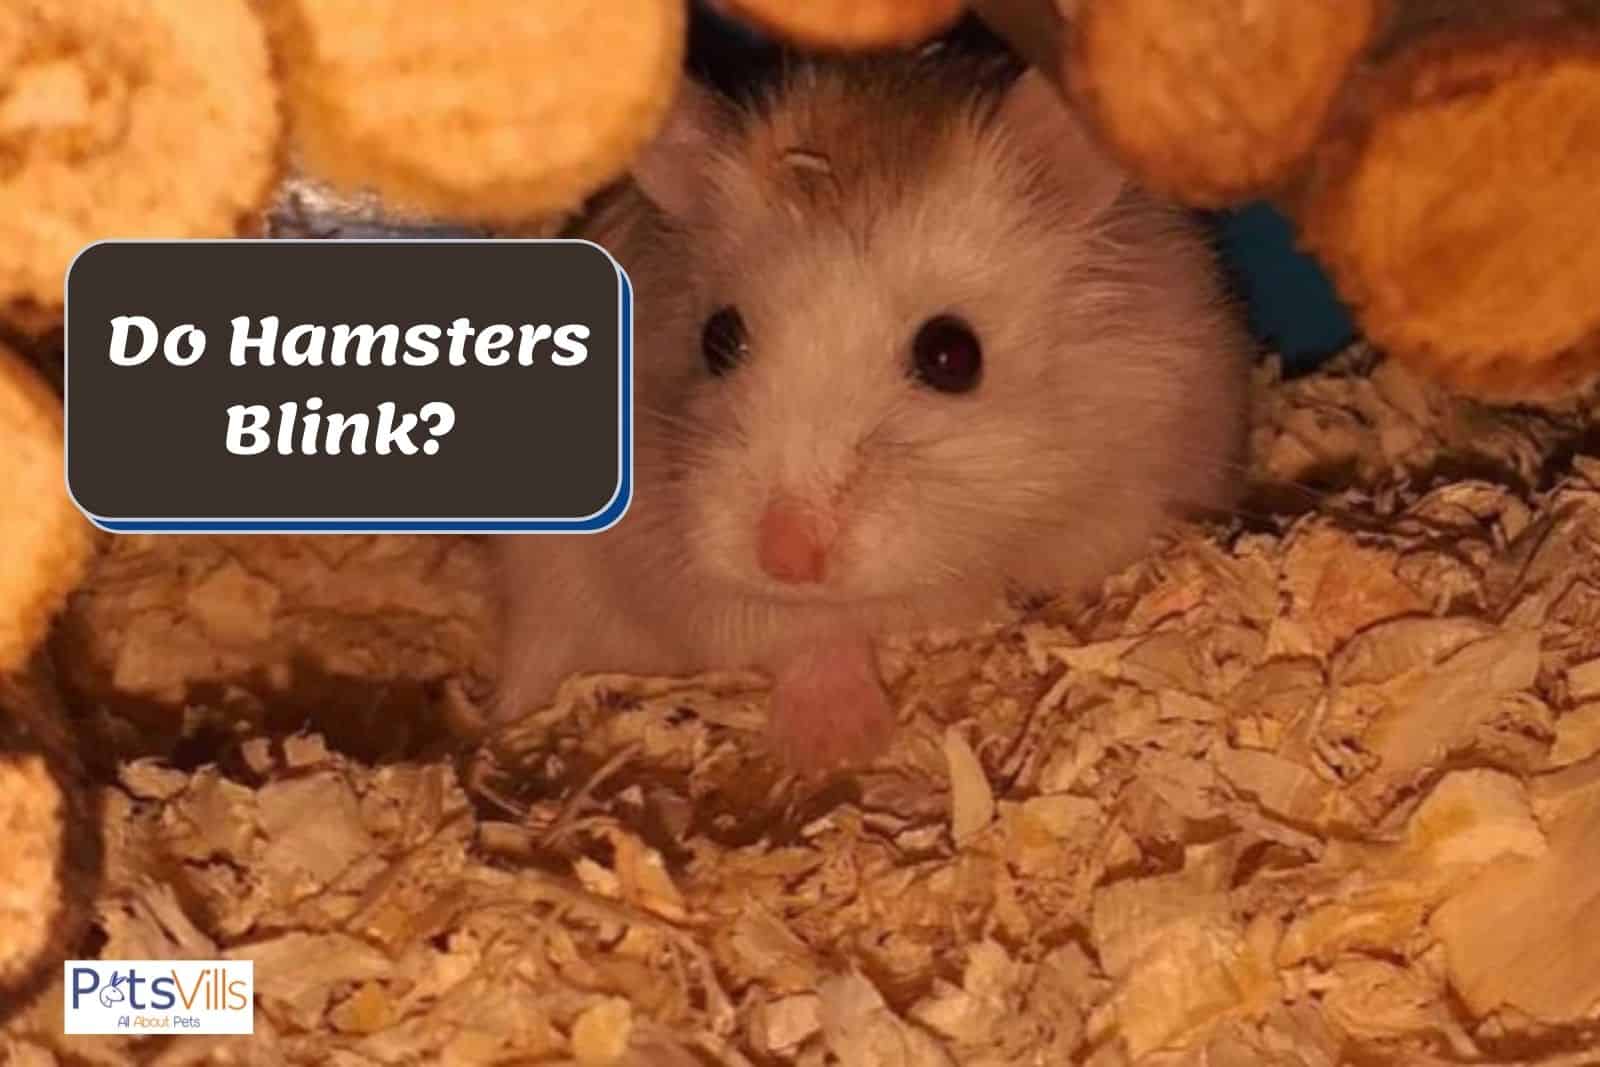 a hamster blinking an eye